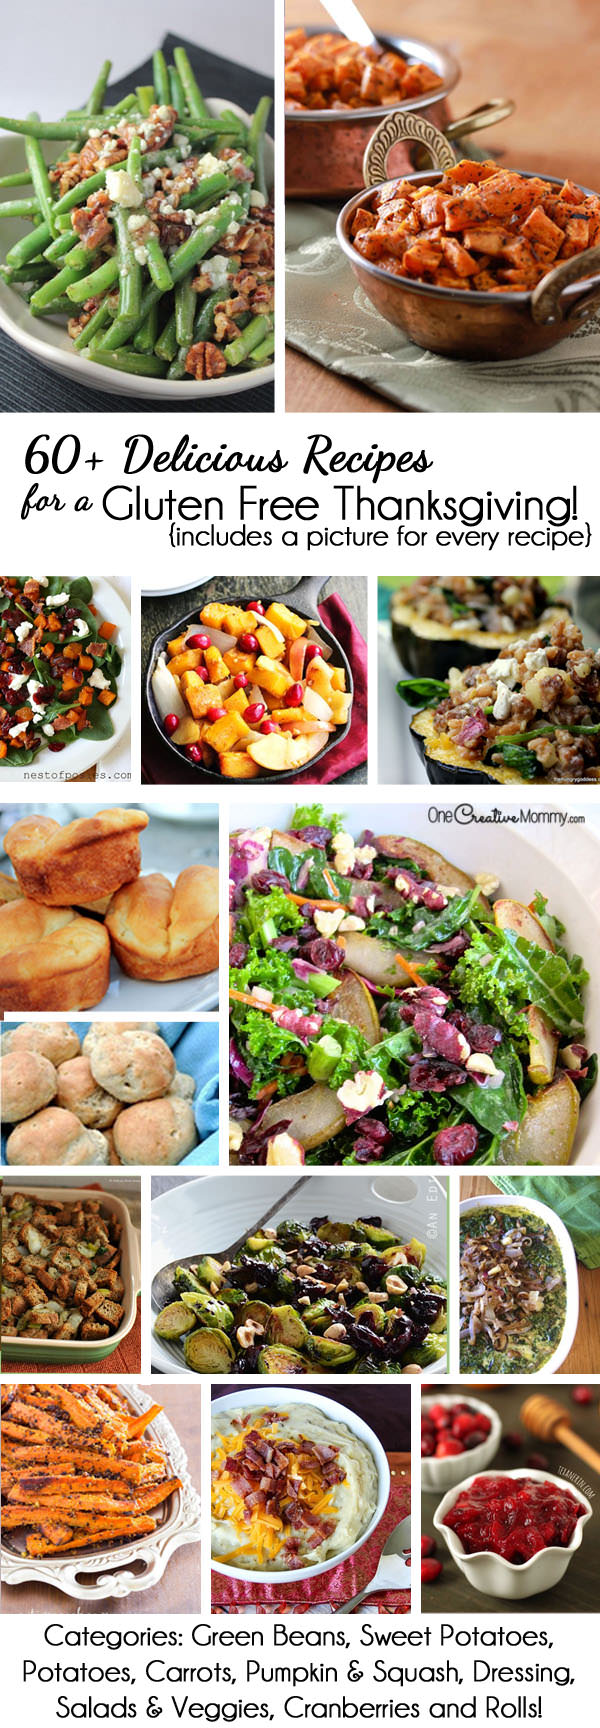 http://onecreativemommy.com/wp-content/uploads/2014/11/gluten-free-thanksgiving-recipes.jpg